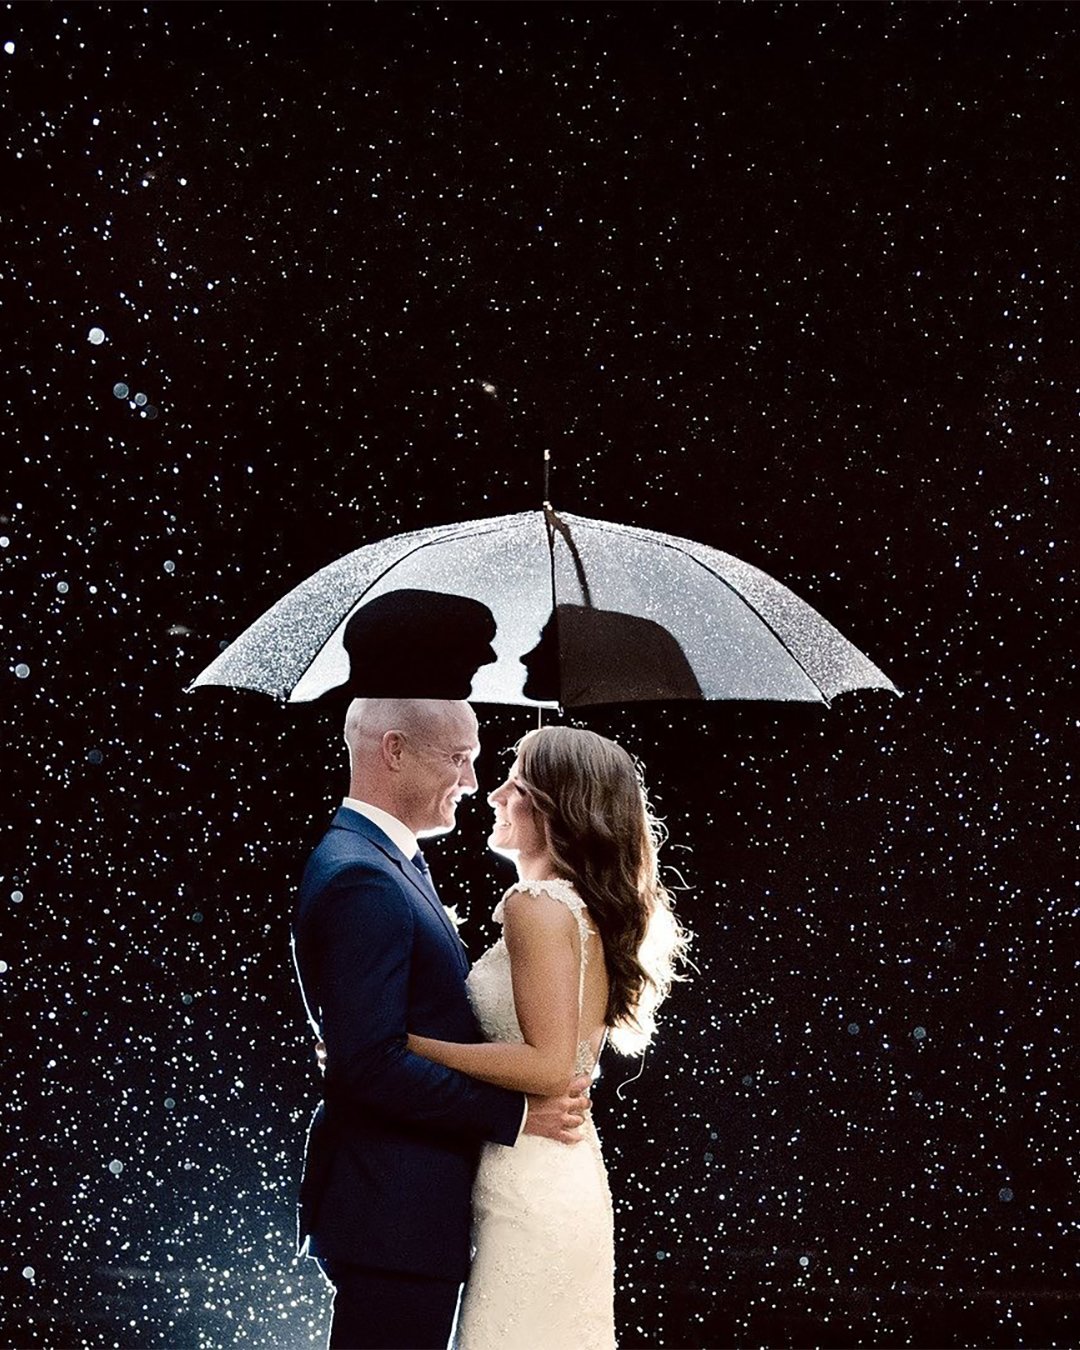 popular wedding photo ideas night couple under umbrella jeromecole